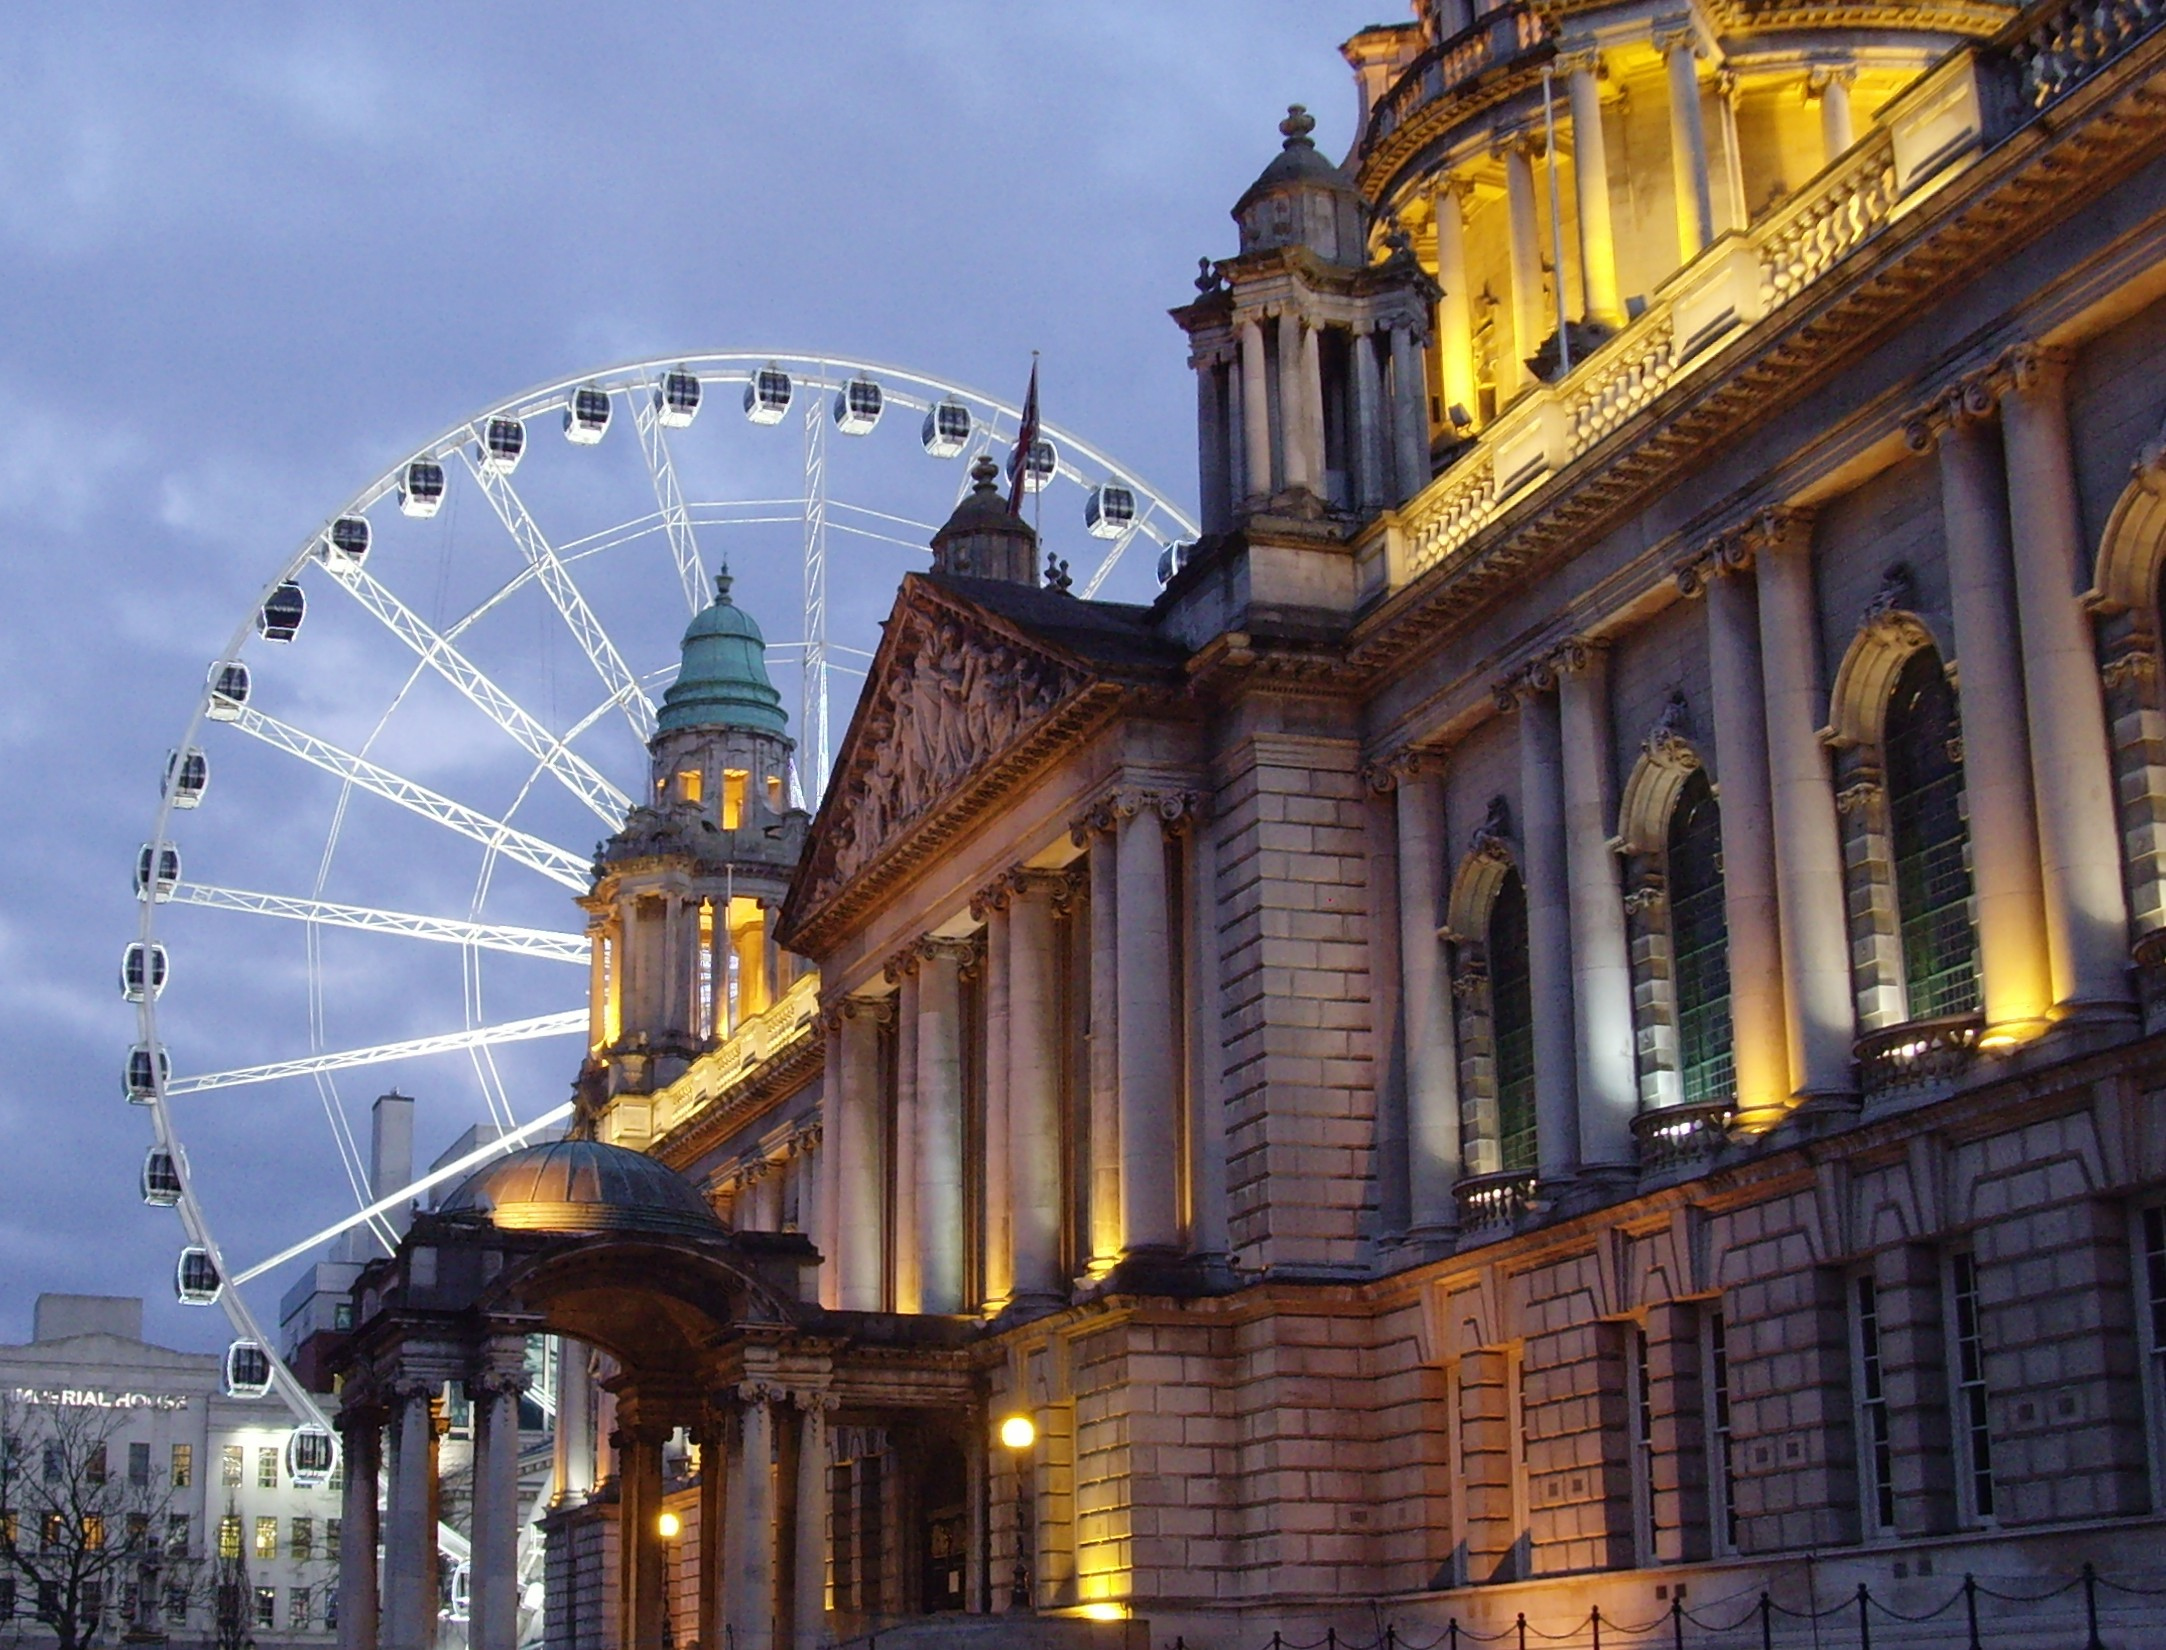 Belfast wheel at night